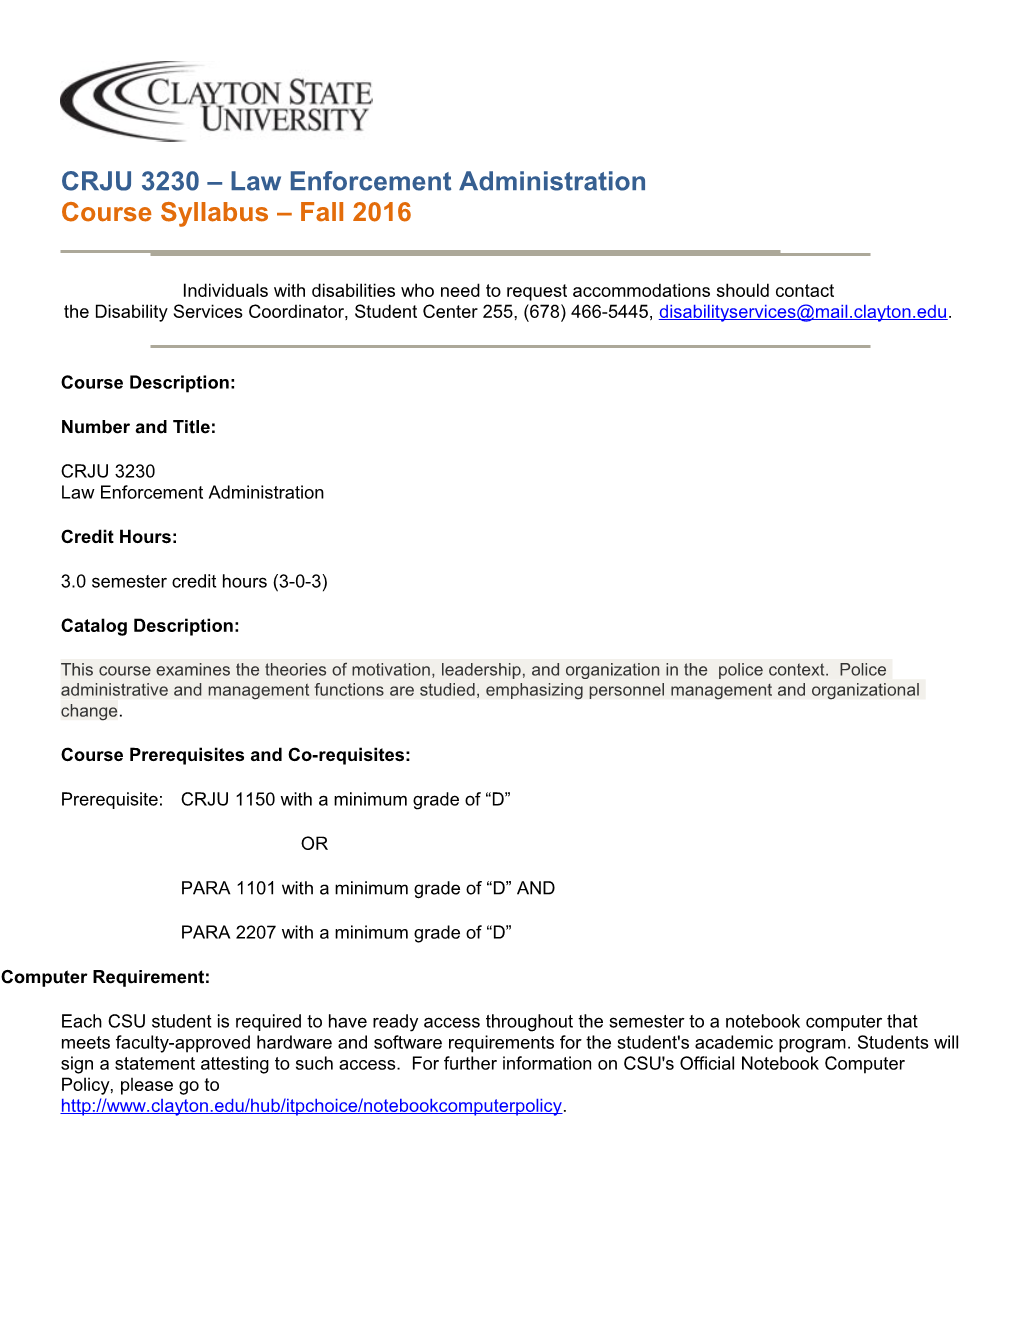 CRJU 3230 Law Enforcement Administration Course Syllabus Fall 2016